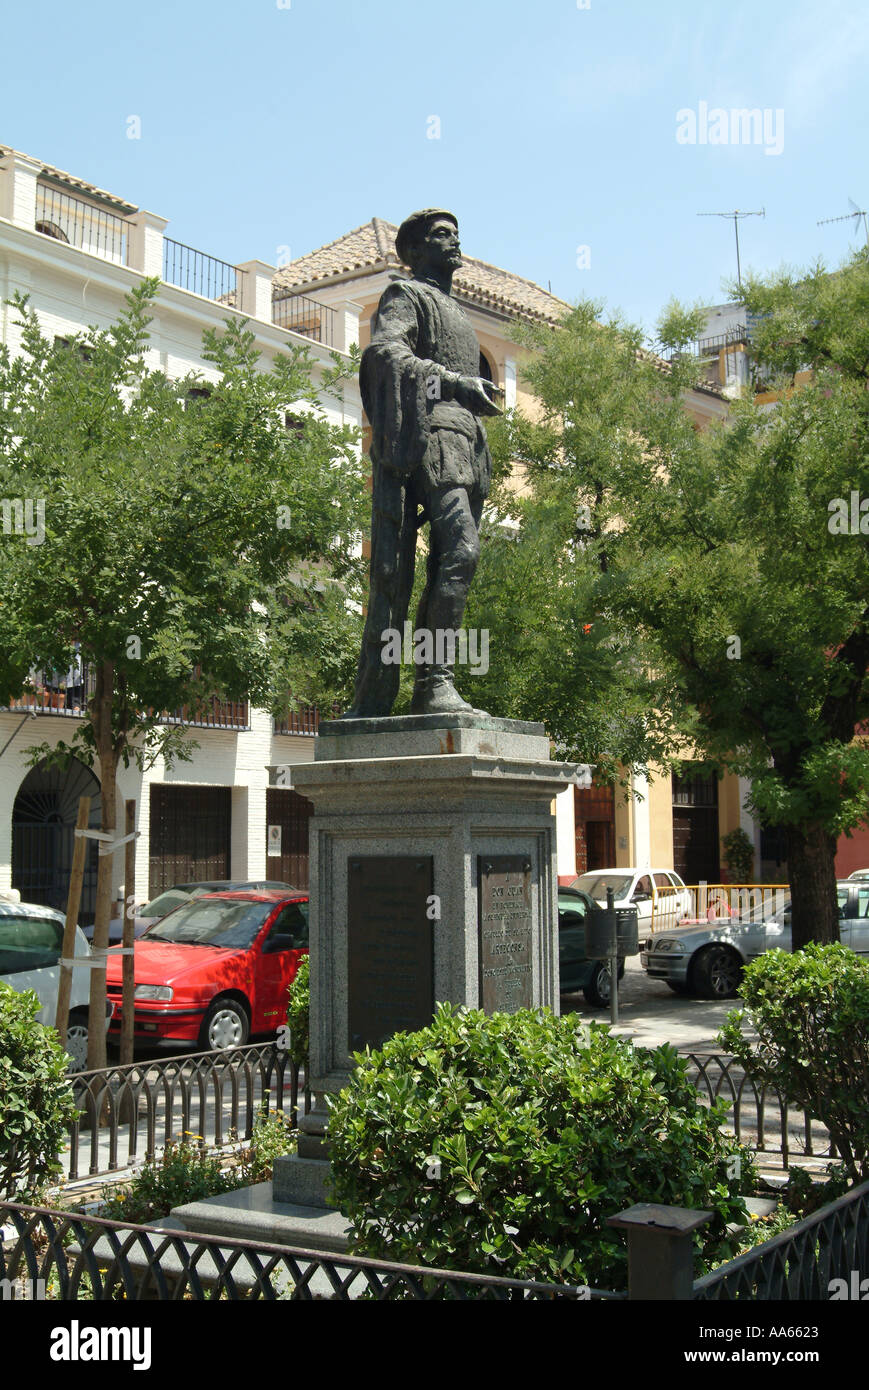 Statue of Don Juan Tenorio in the Plaza de los Refinadores Seville Spain Stock Photo